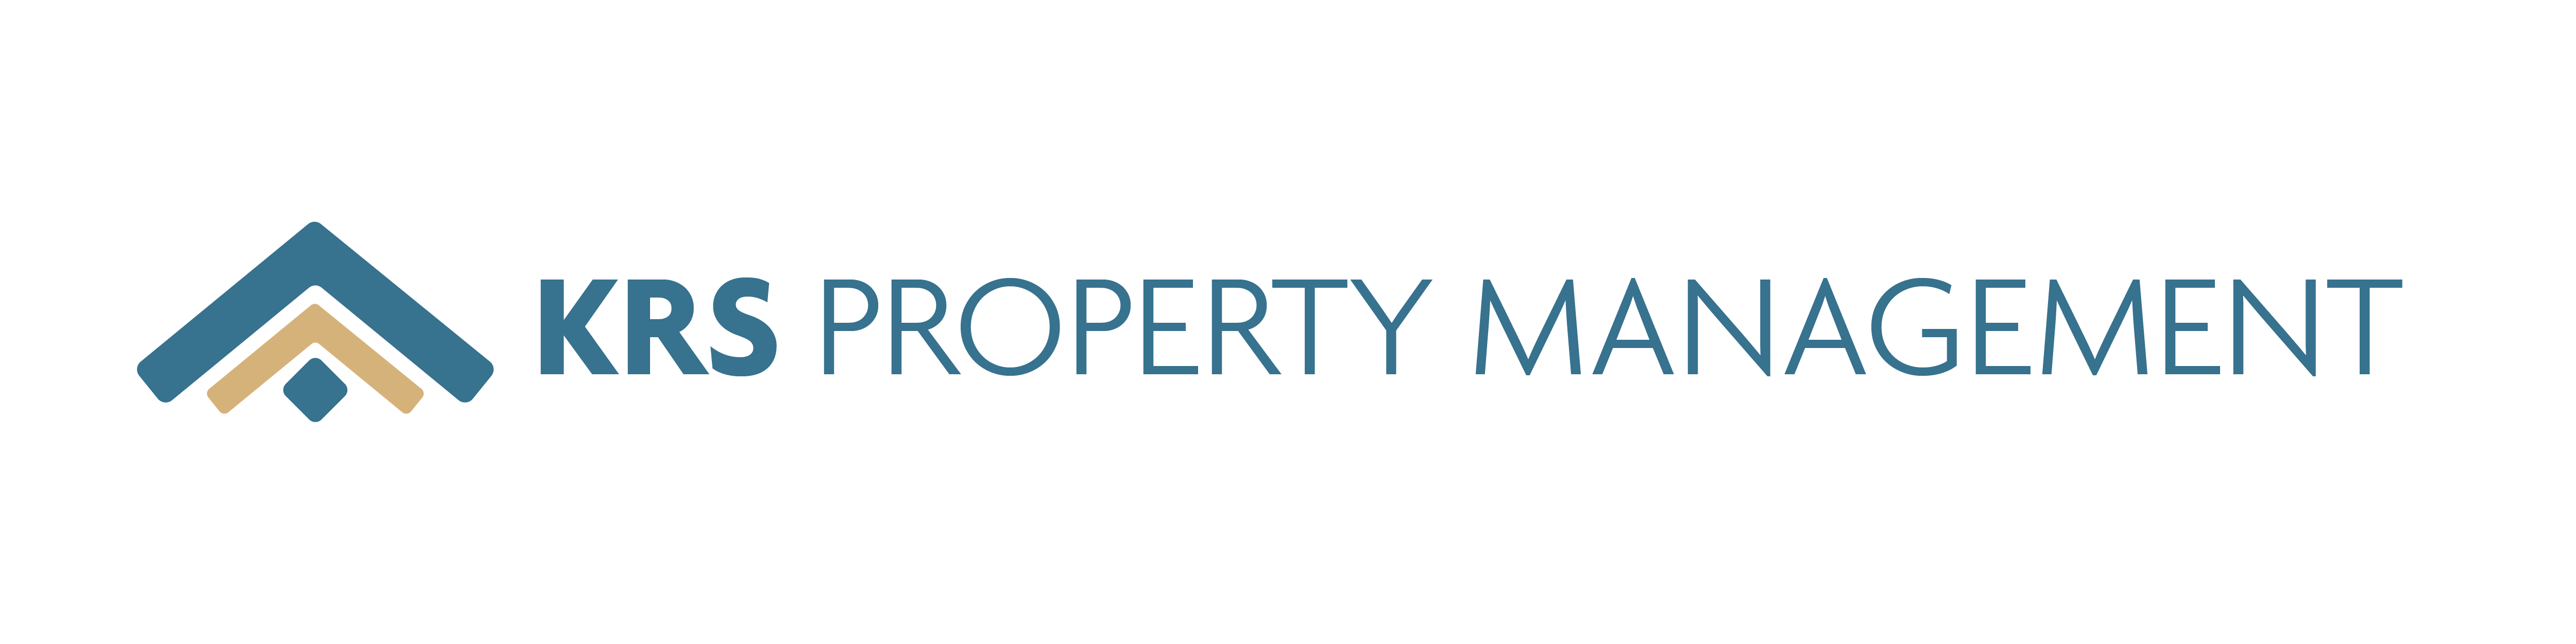 KRS Property Management logo